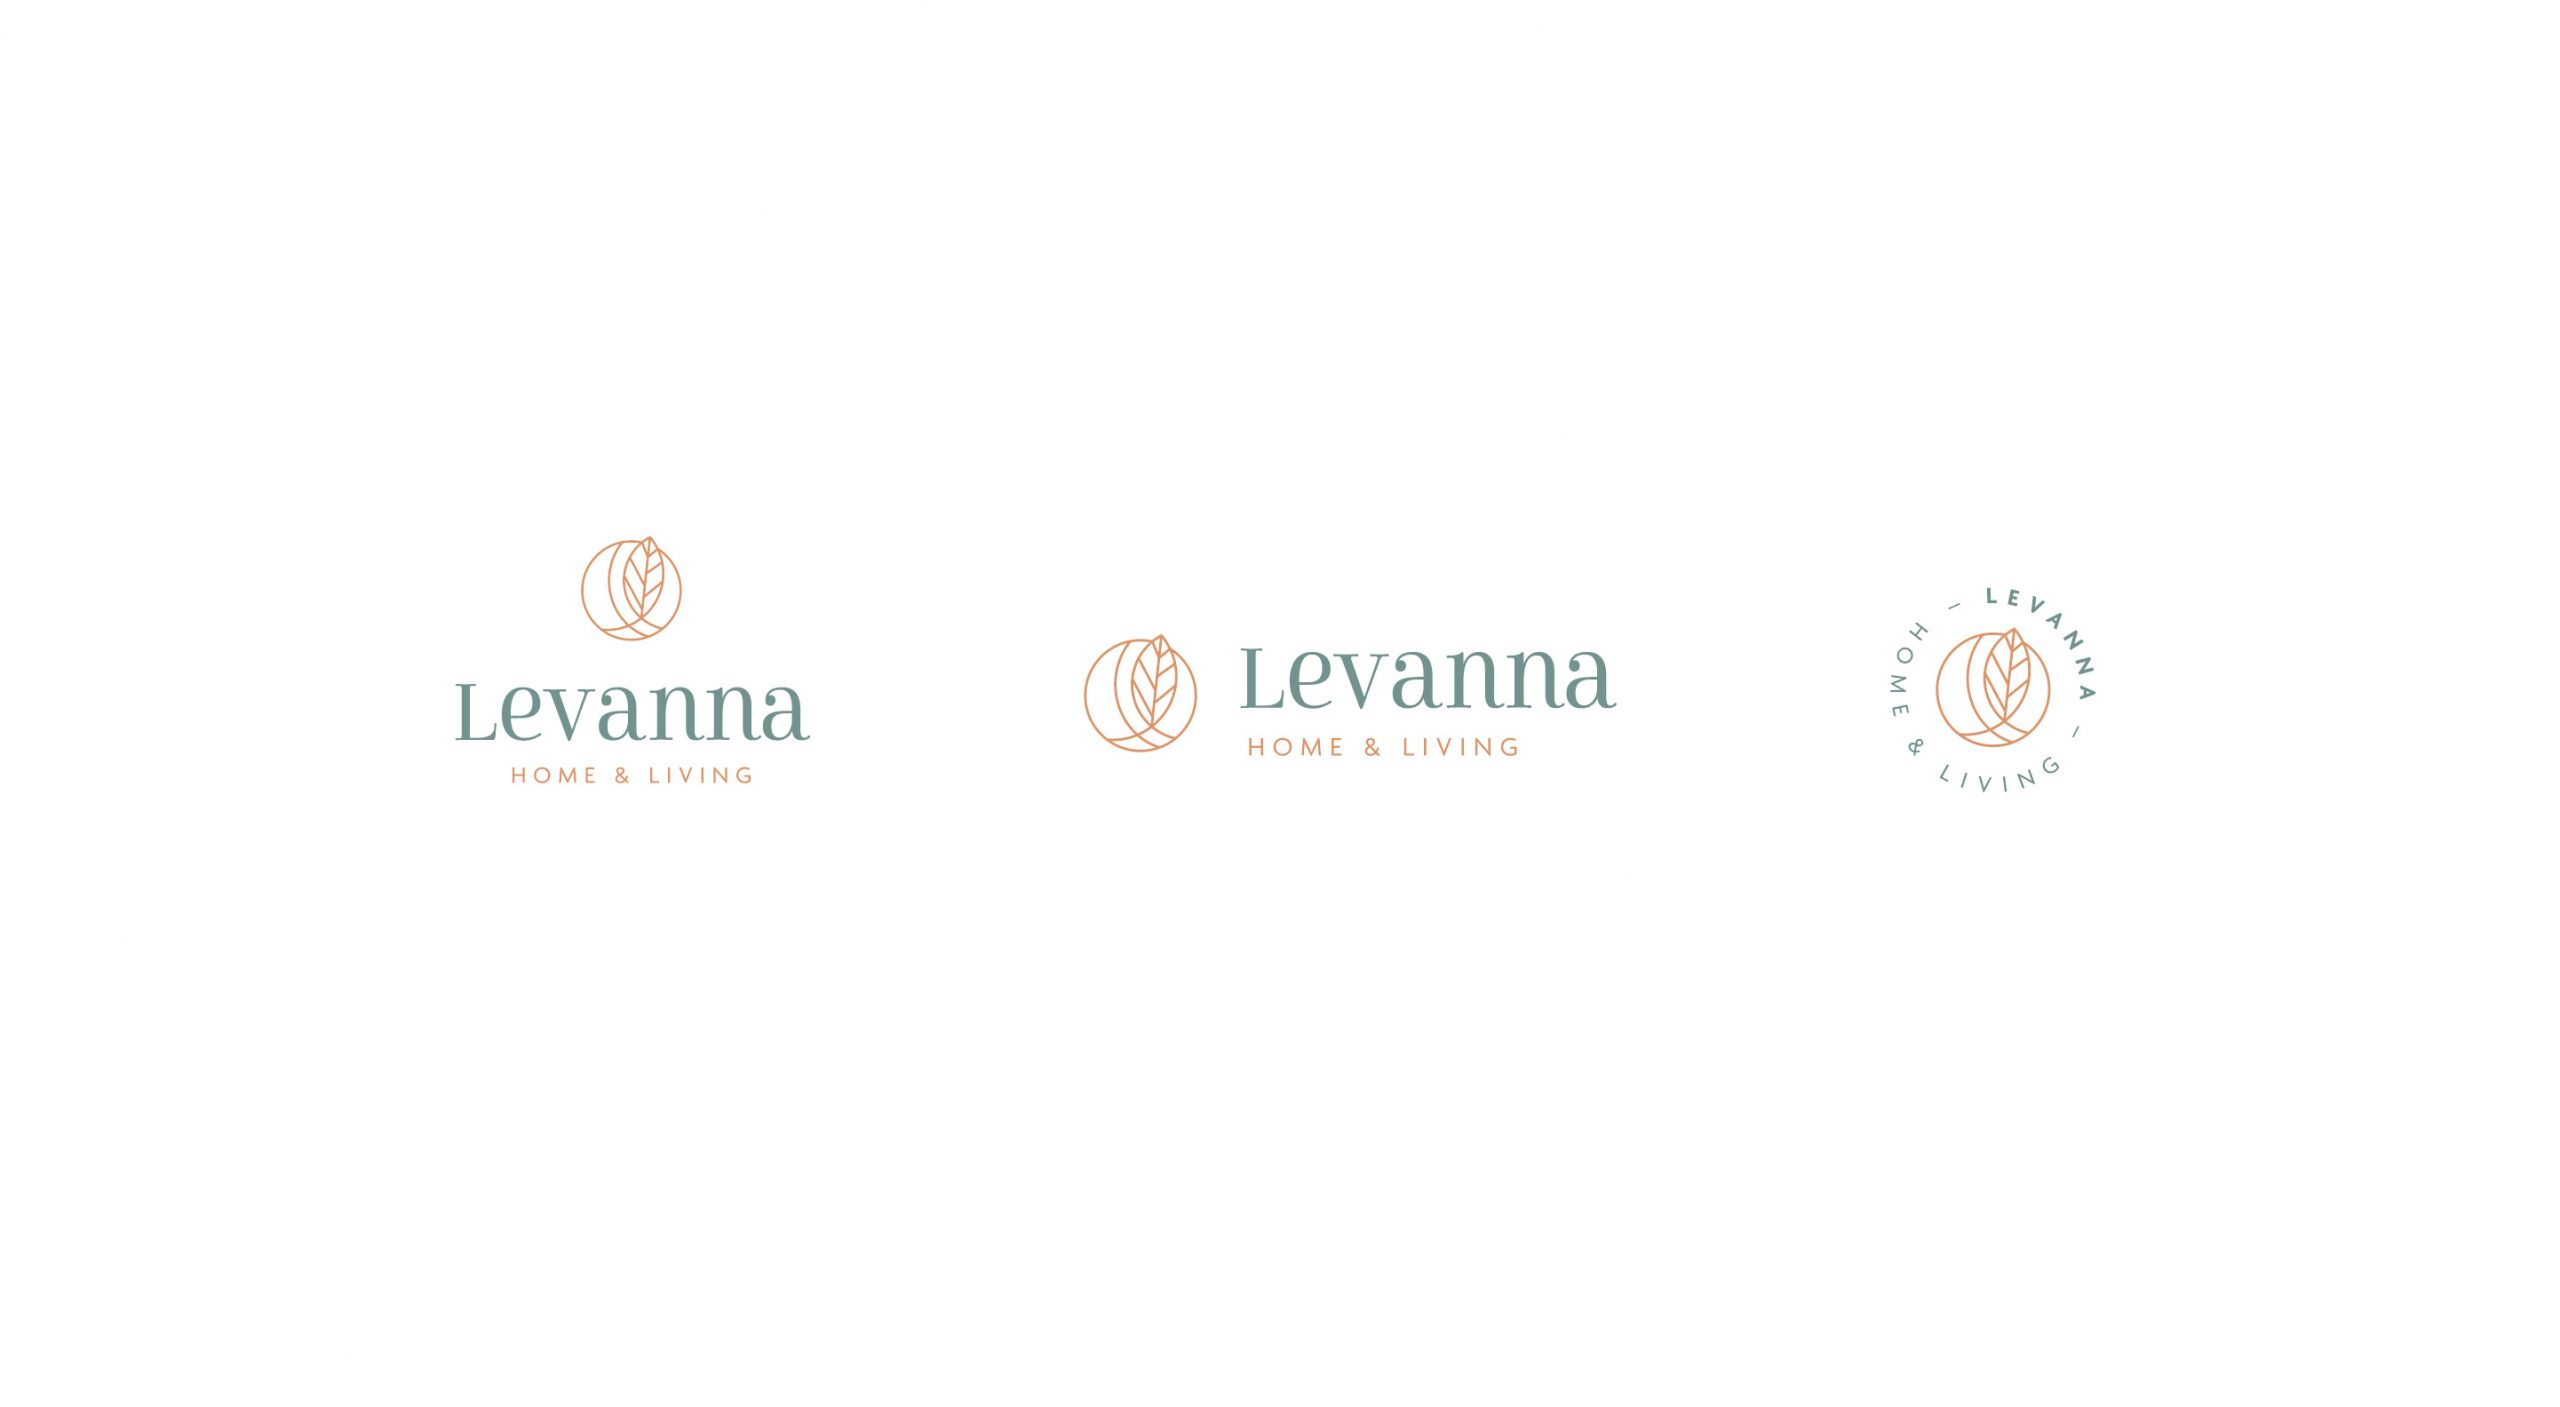 Levanna – Home & Living